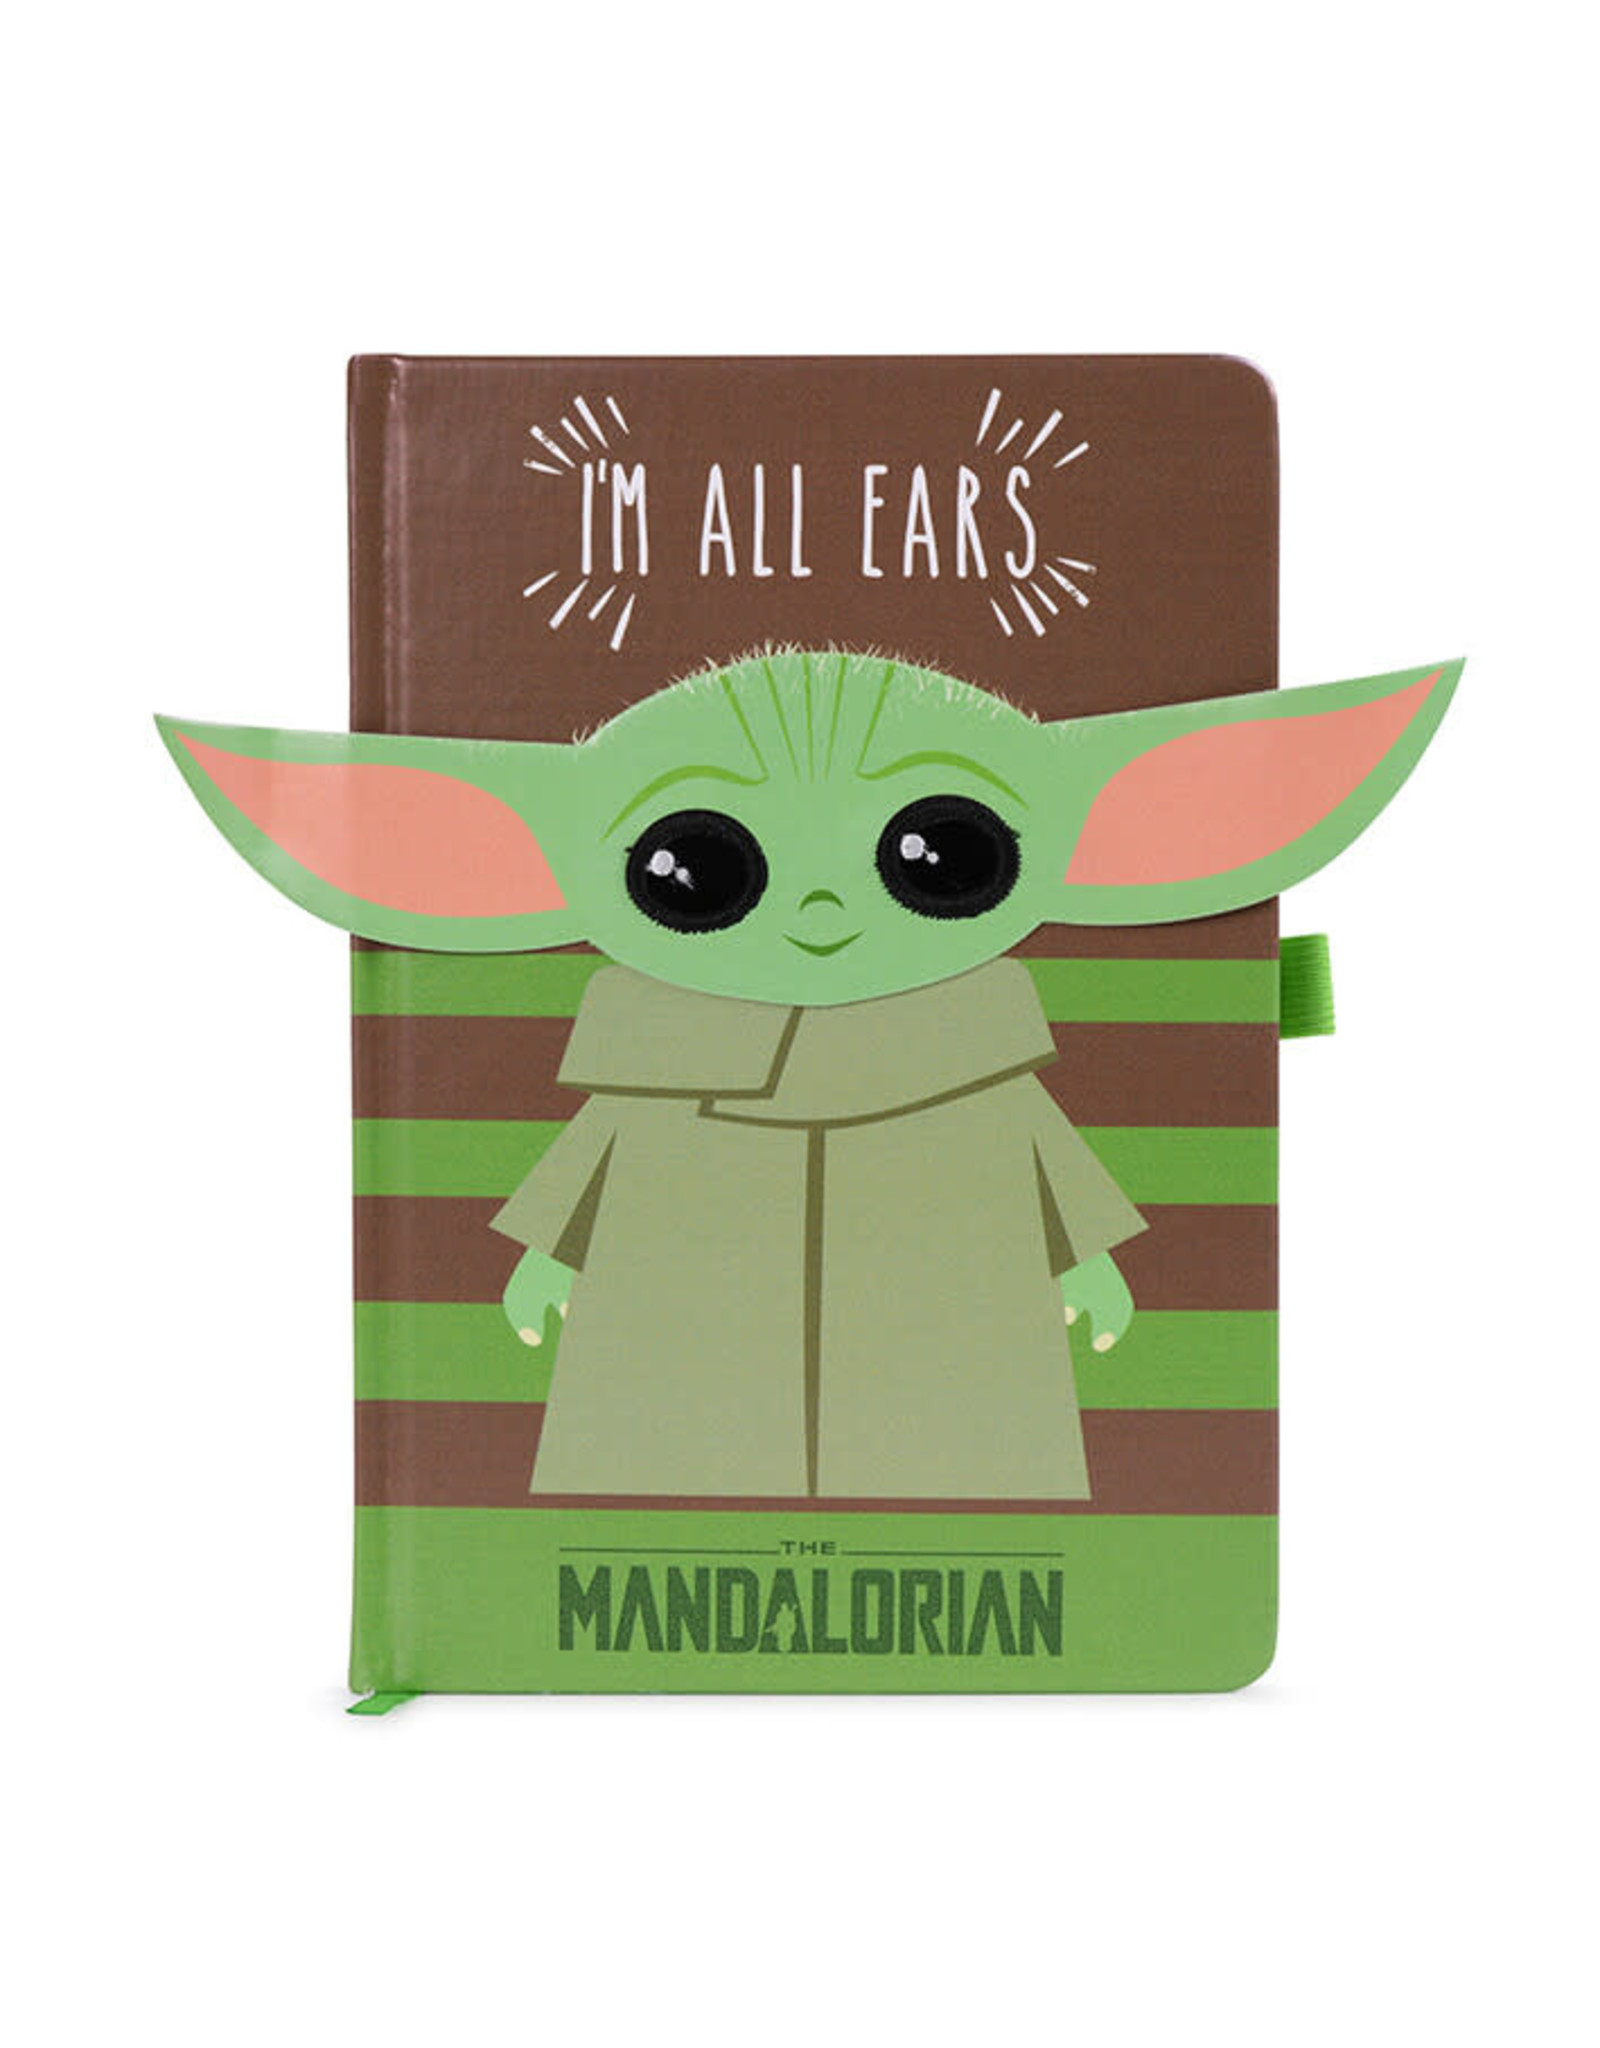 Star Wars Mandalorian "All Ears" Notebook